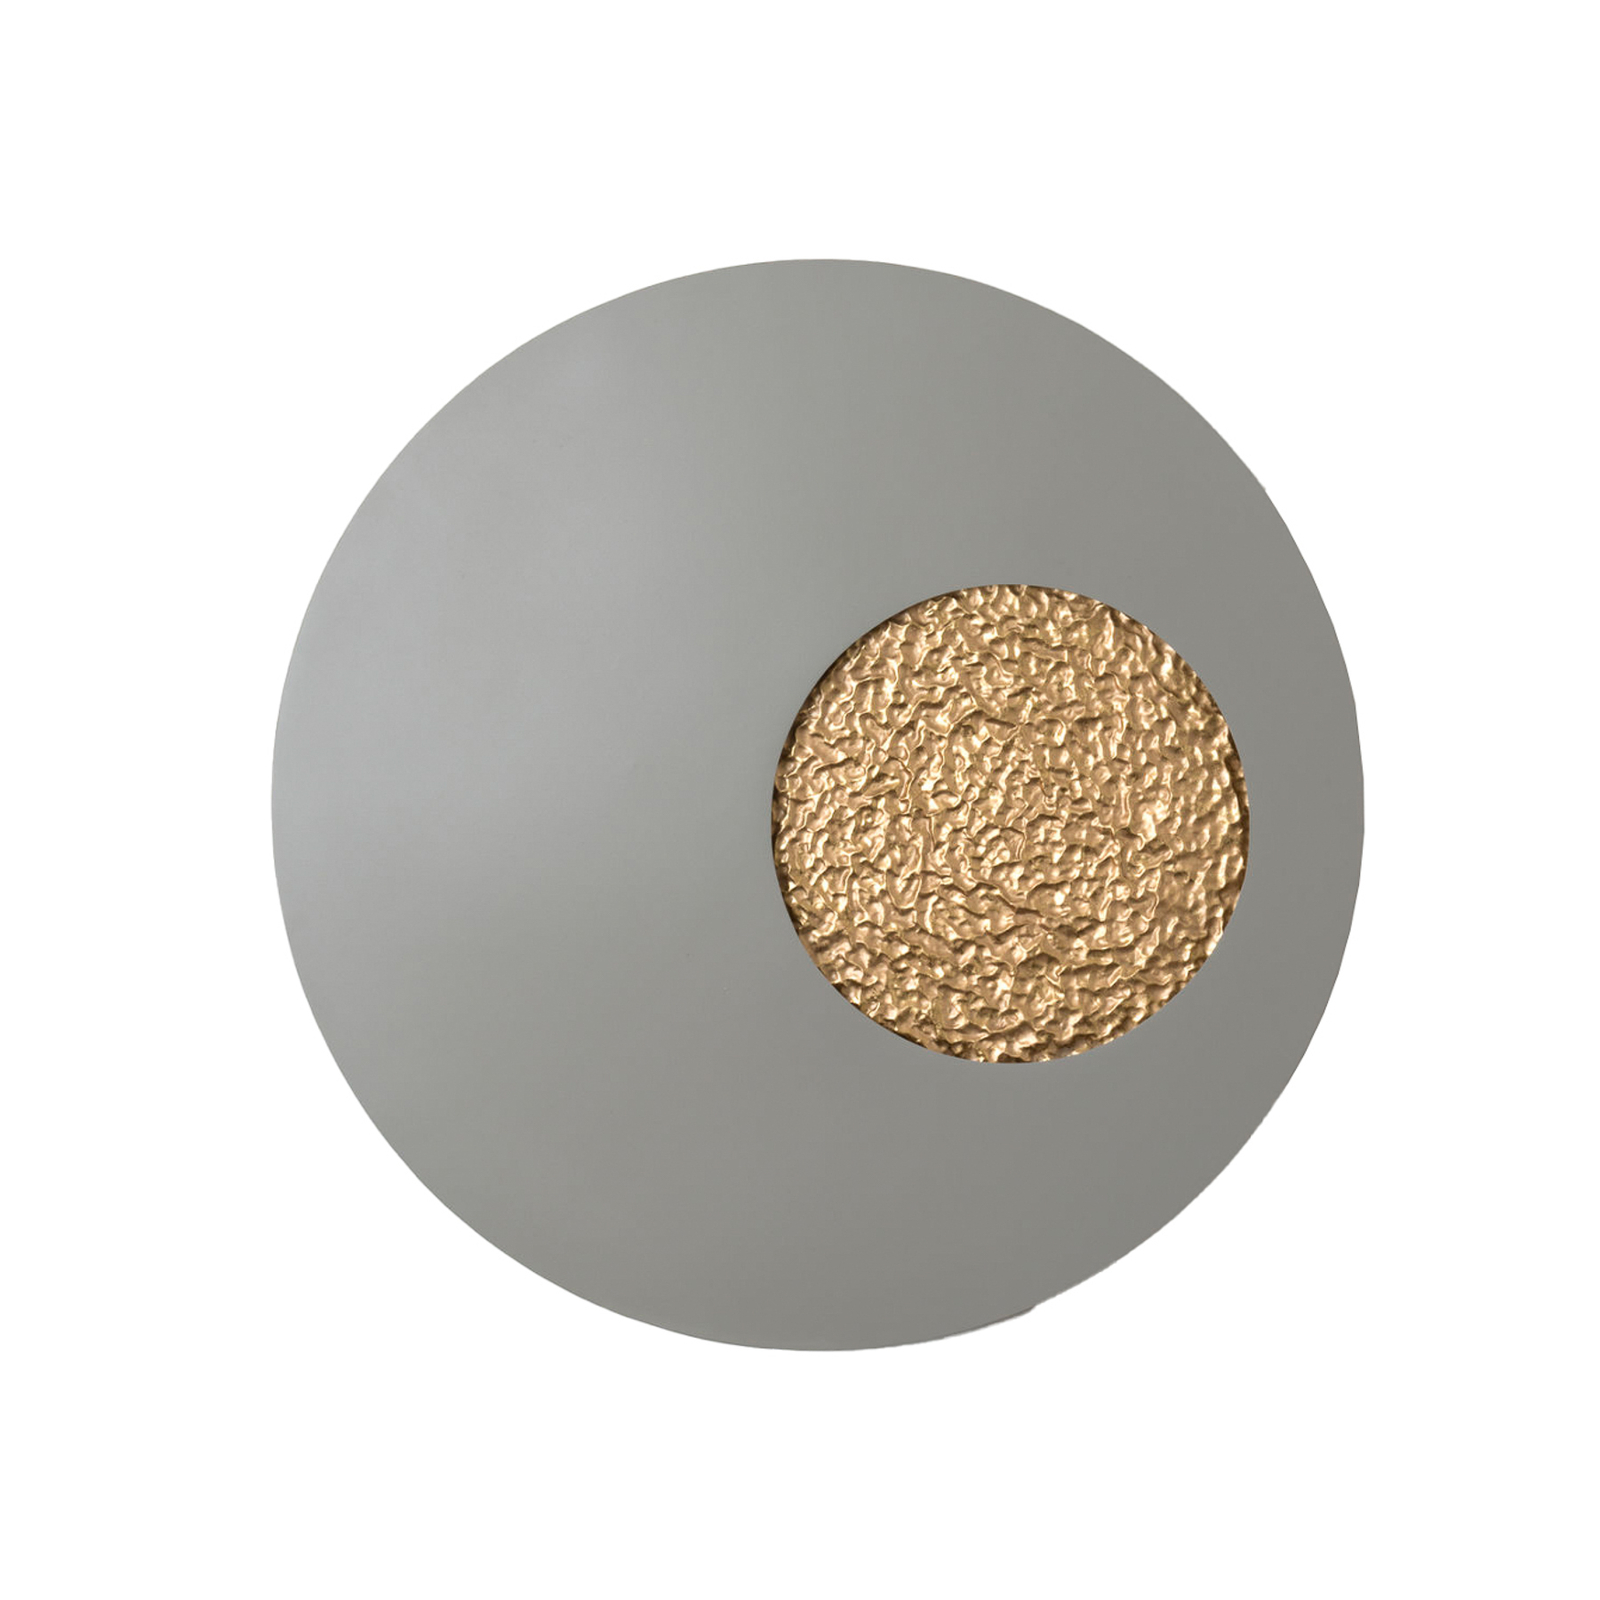 LED wall light Luna, grey/gold, Ø 80 cm, iron